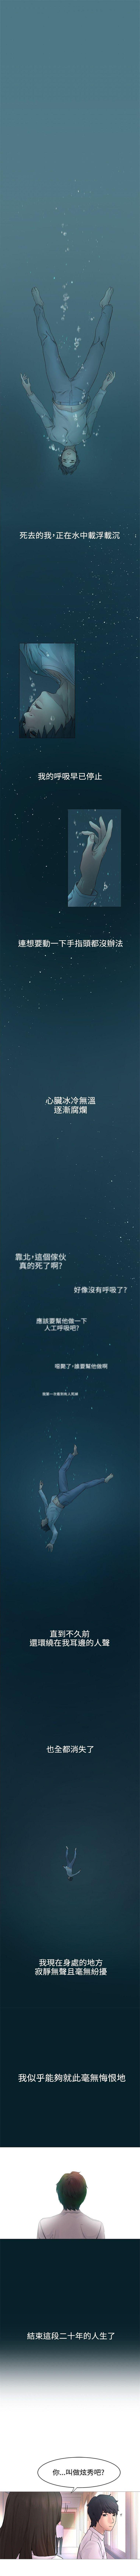 Nurumassage 衝突 1-113 官方中文（連載中） Cfnm - Page 2